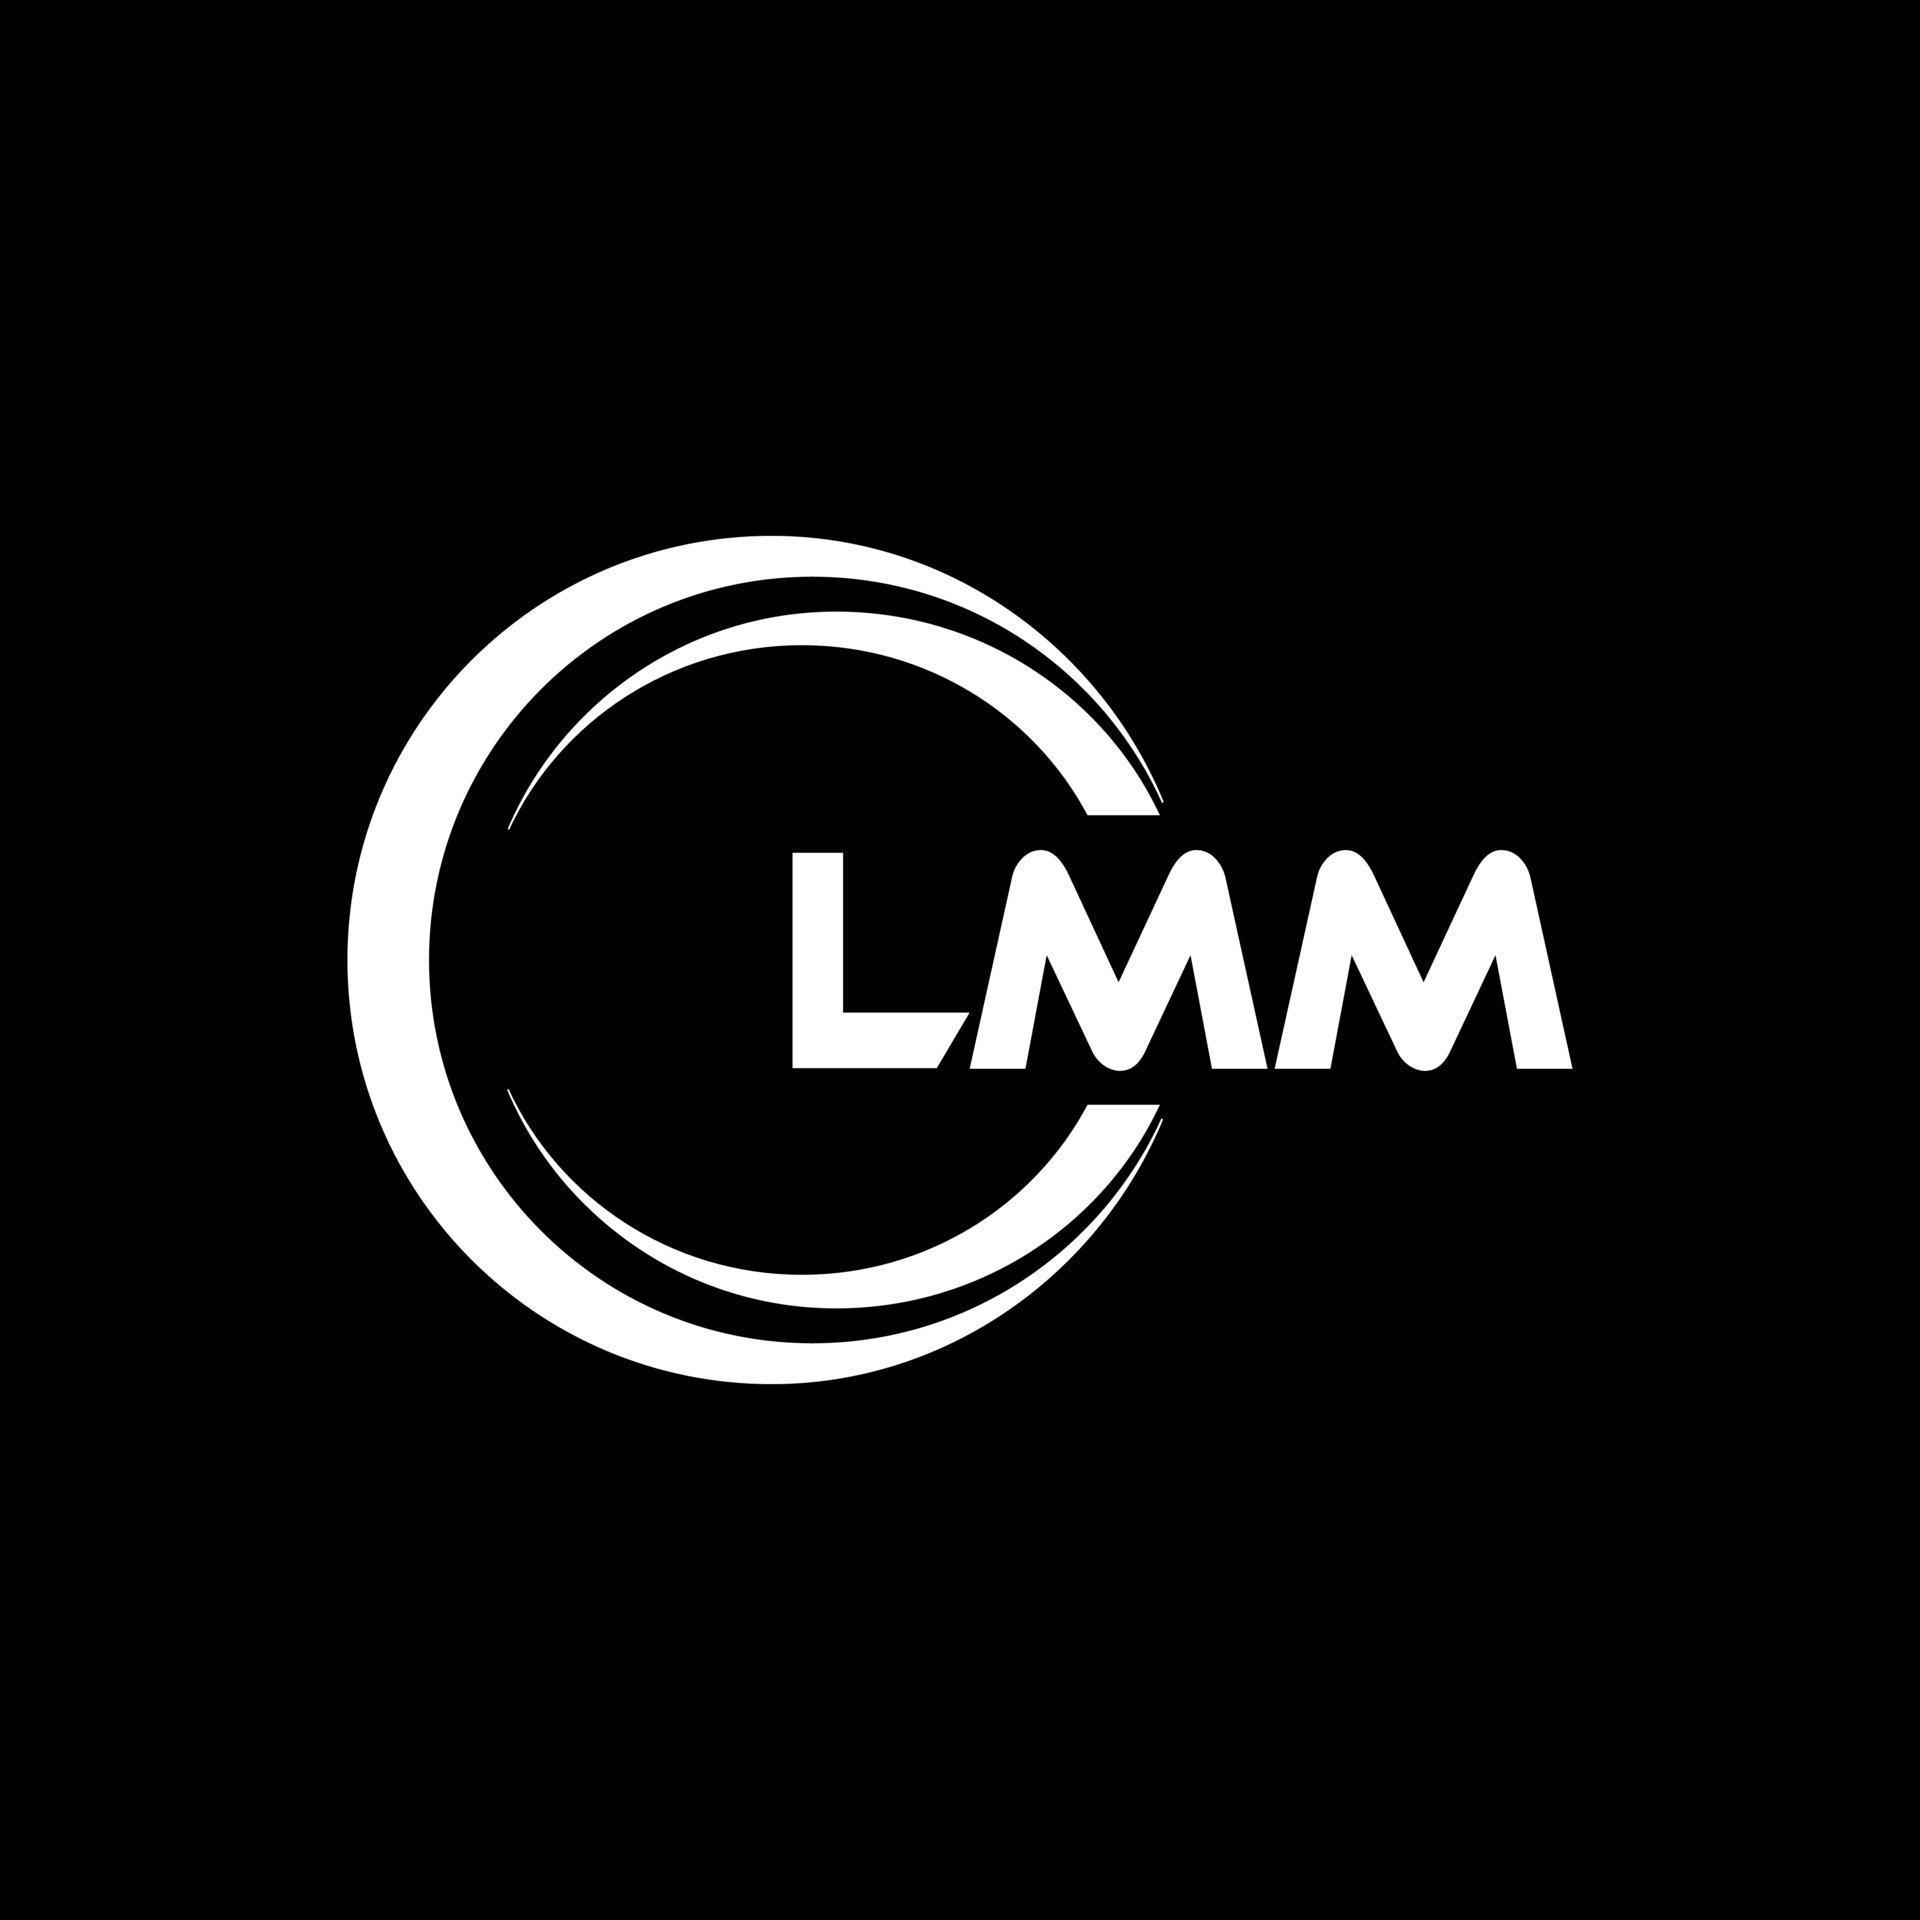 LMM letter logo design in illustration. Vector logo, calligraphy ...